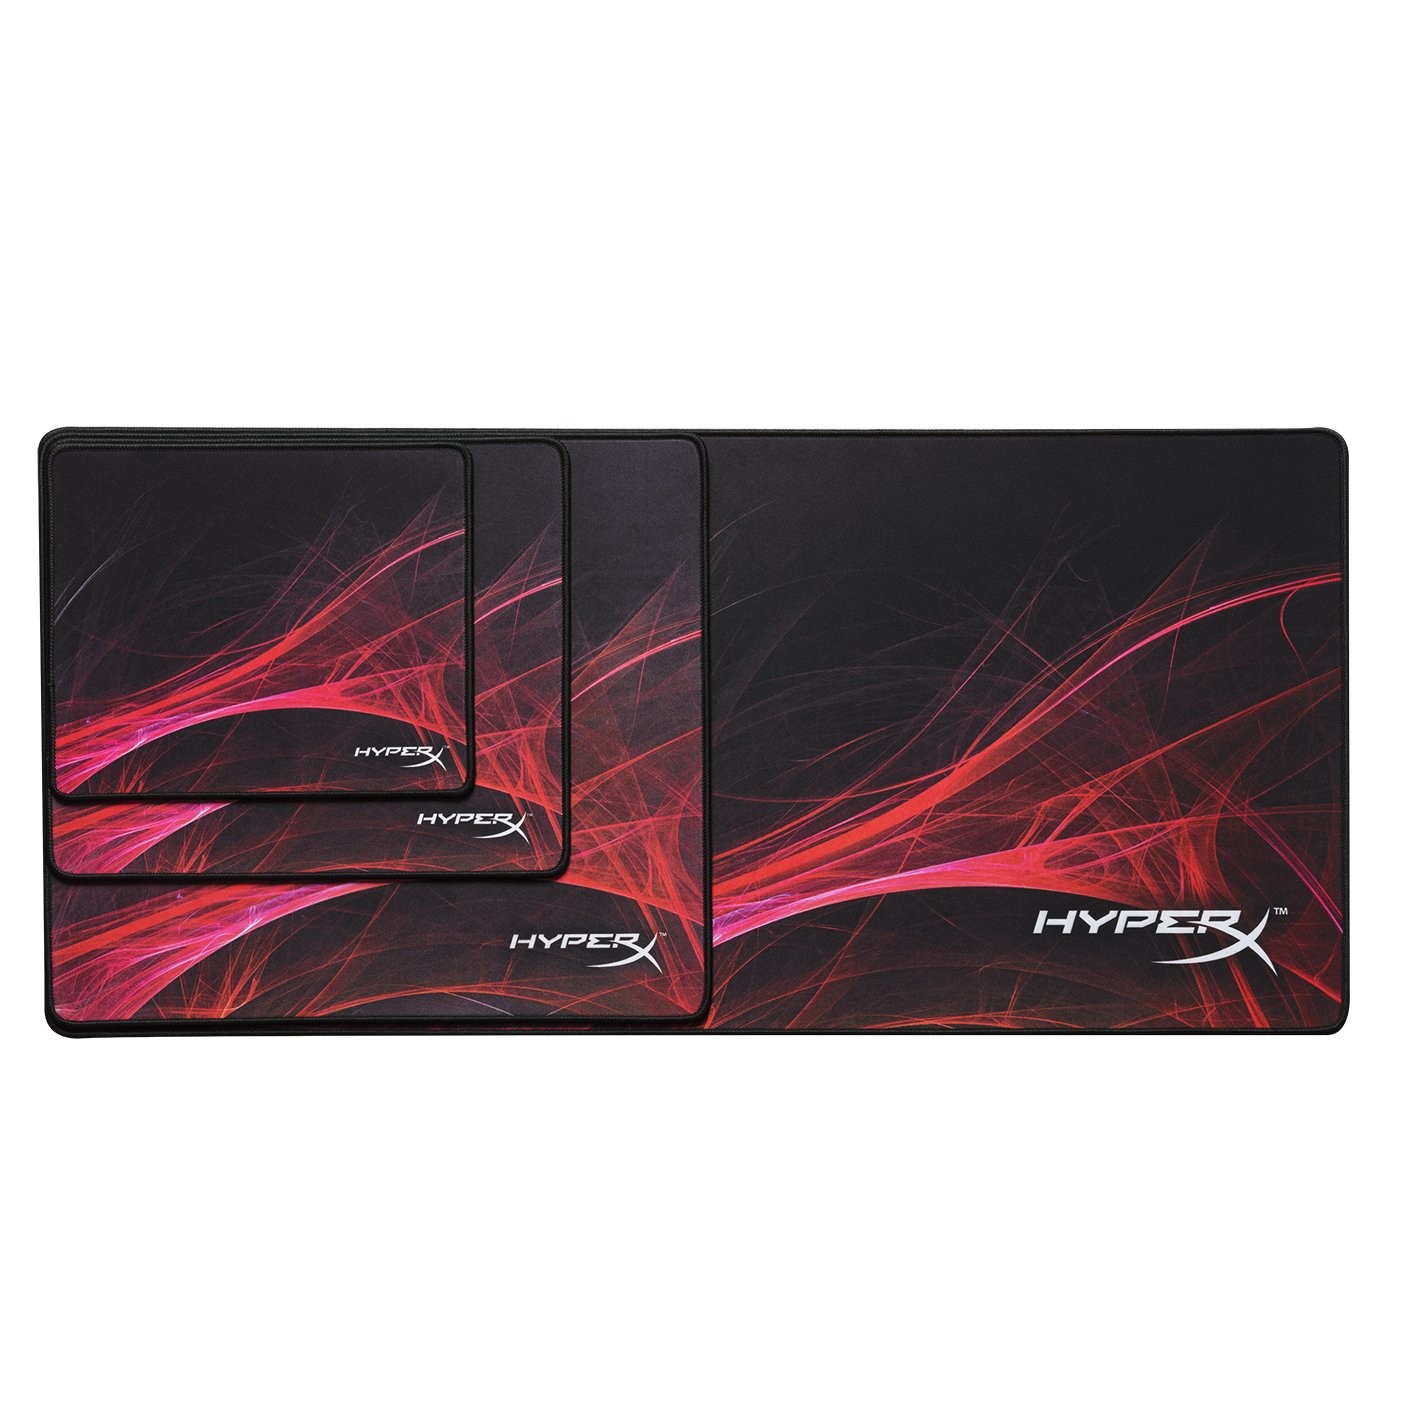 HyperX FURY S Speed Edition Gaming Mouse Pad (Extra Large) ของแท้ แผ่นรองเมาส์